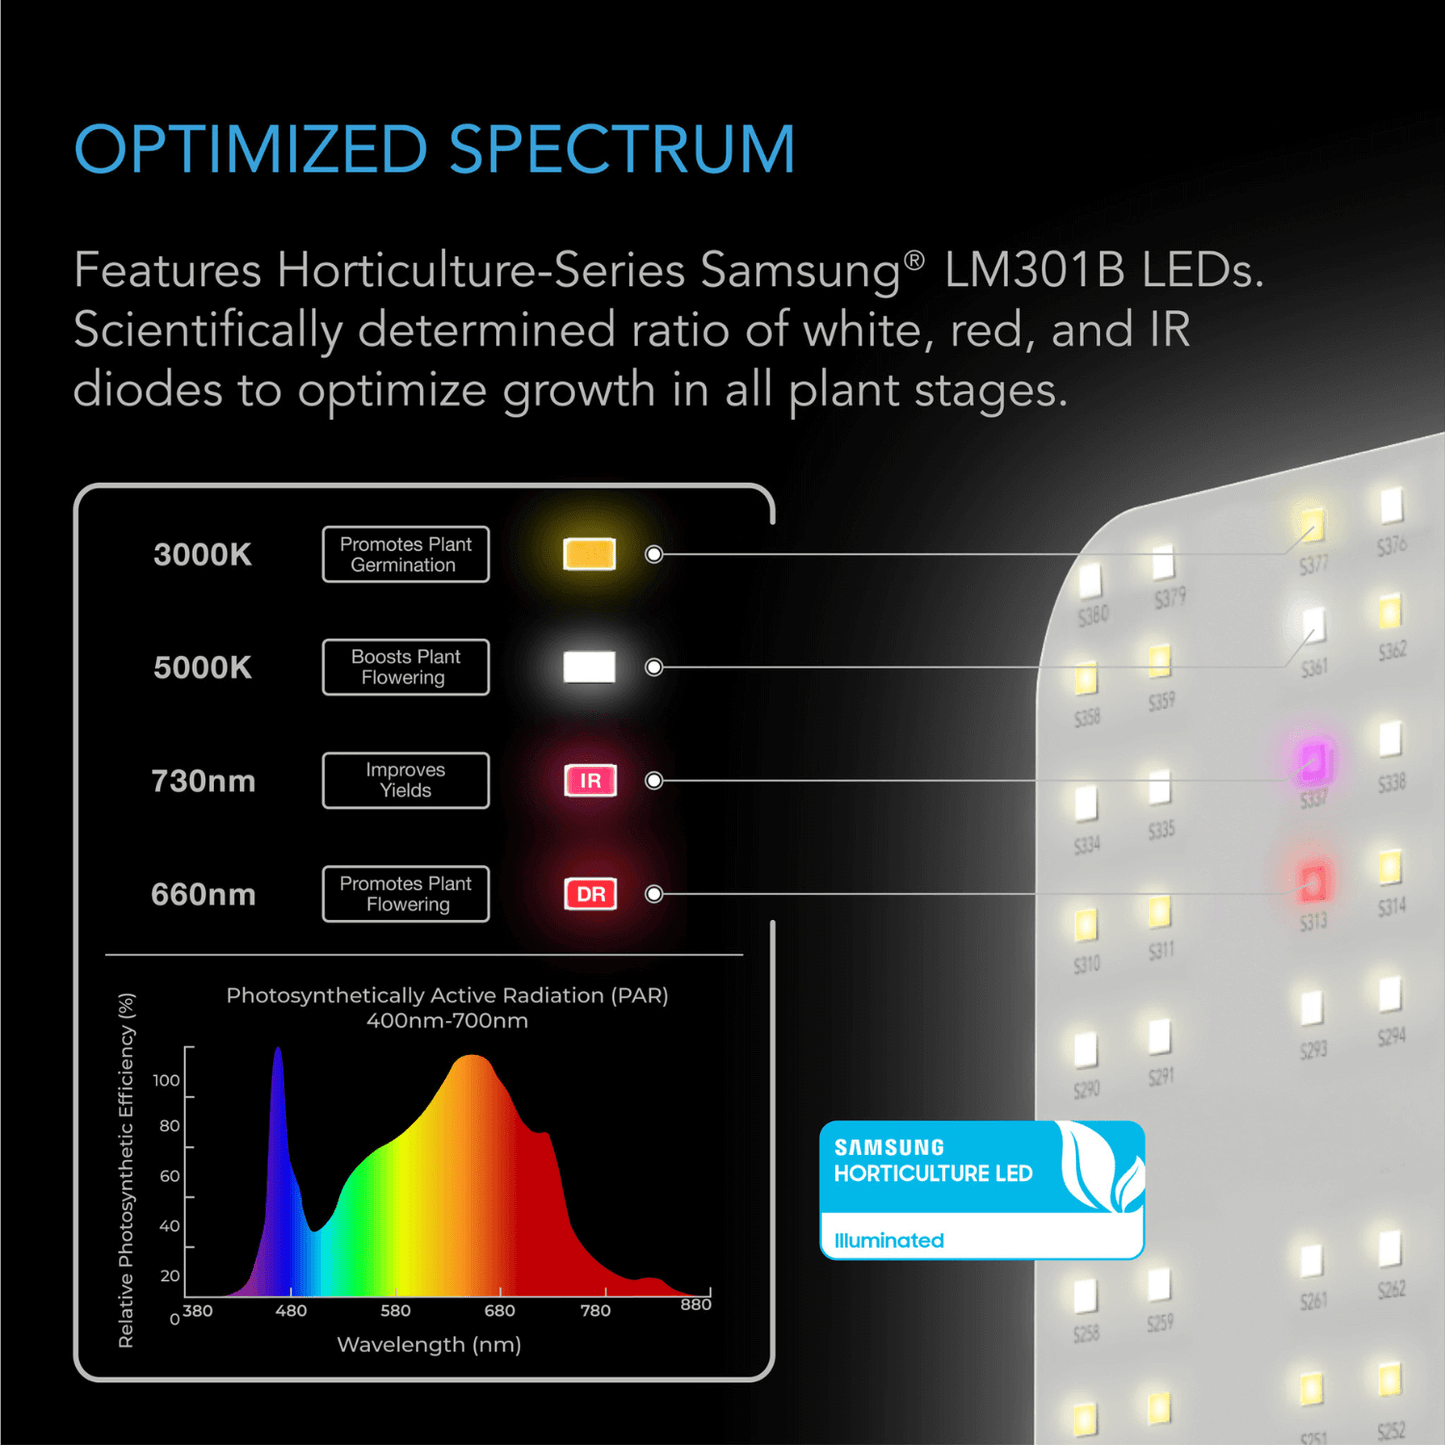 AC Infinity IONBOARD S33, Full Spectrum LED Grow Light 240W, Samsung LM301B, 3x3 Ft. Coverage AC-IBS33 Grow Lights 819137022539